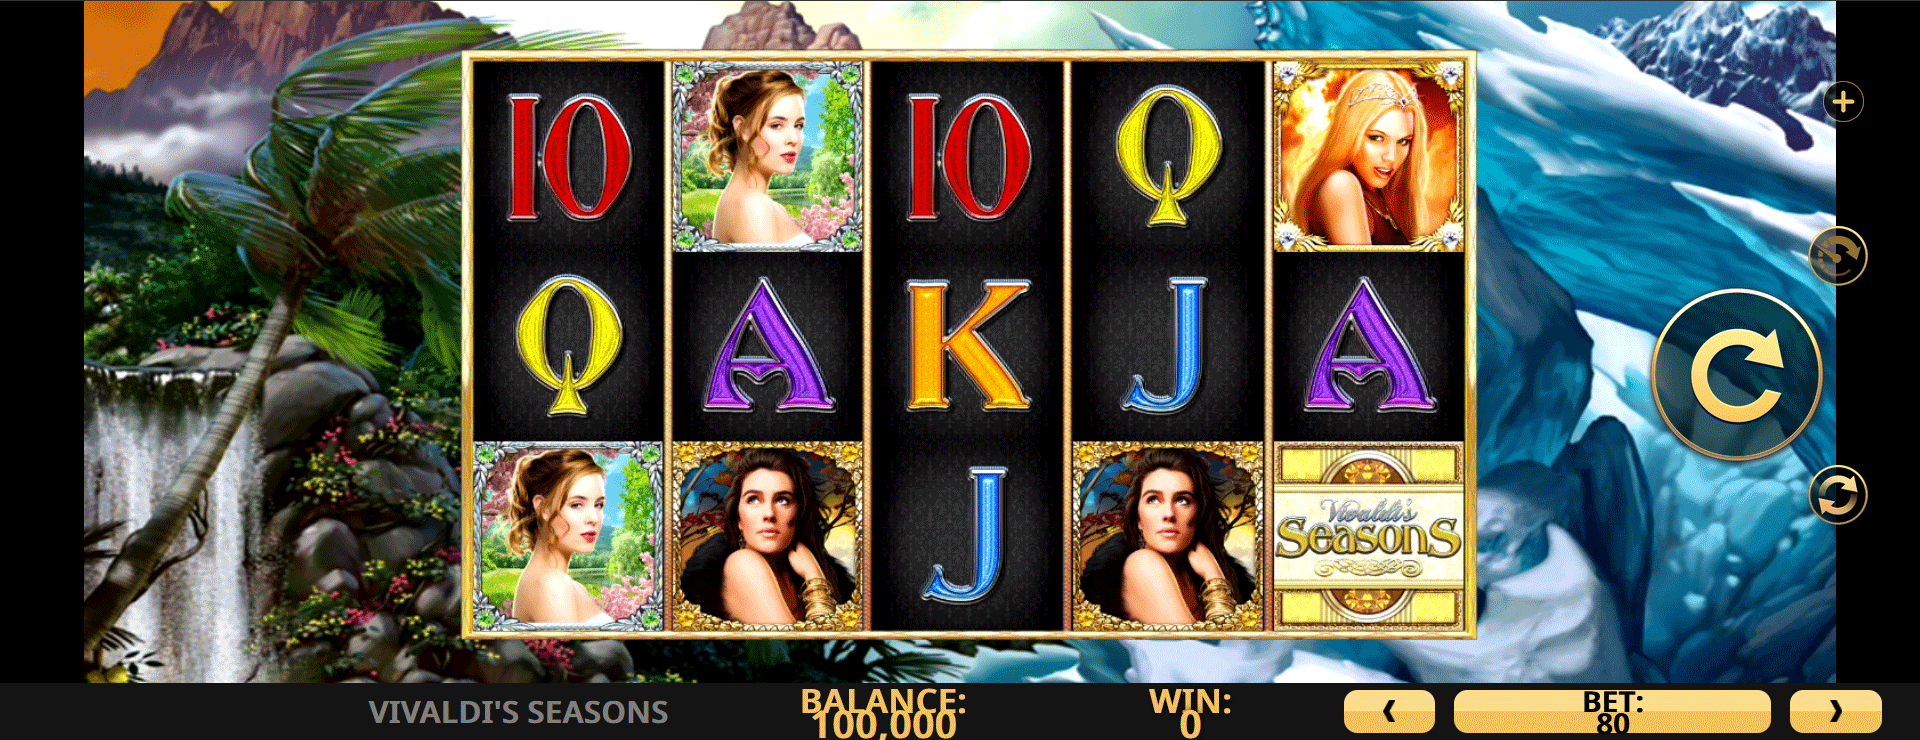 schermata del gioco slot machine vivaldi's seasons